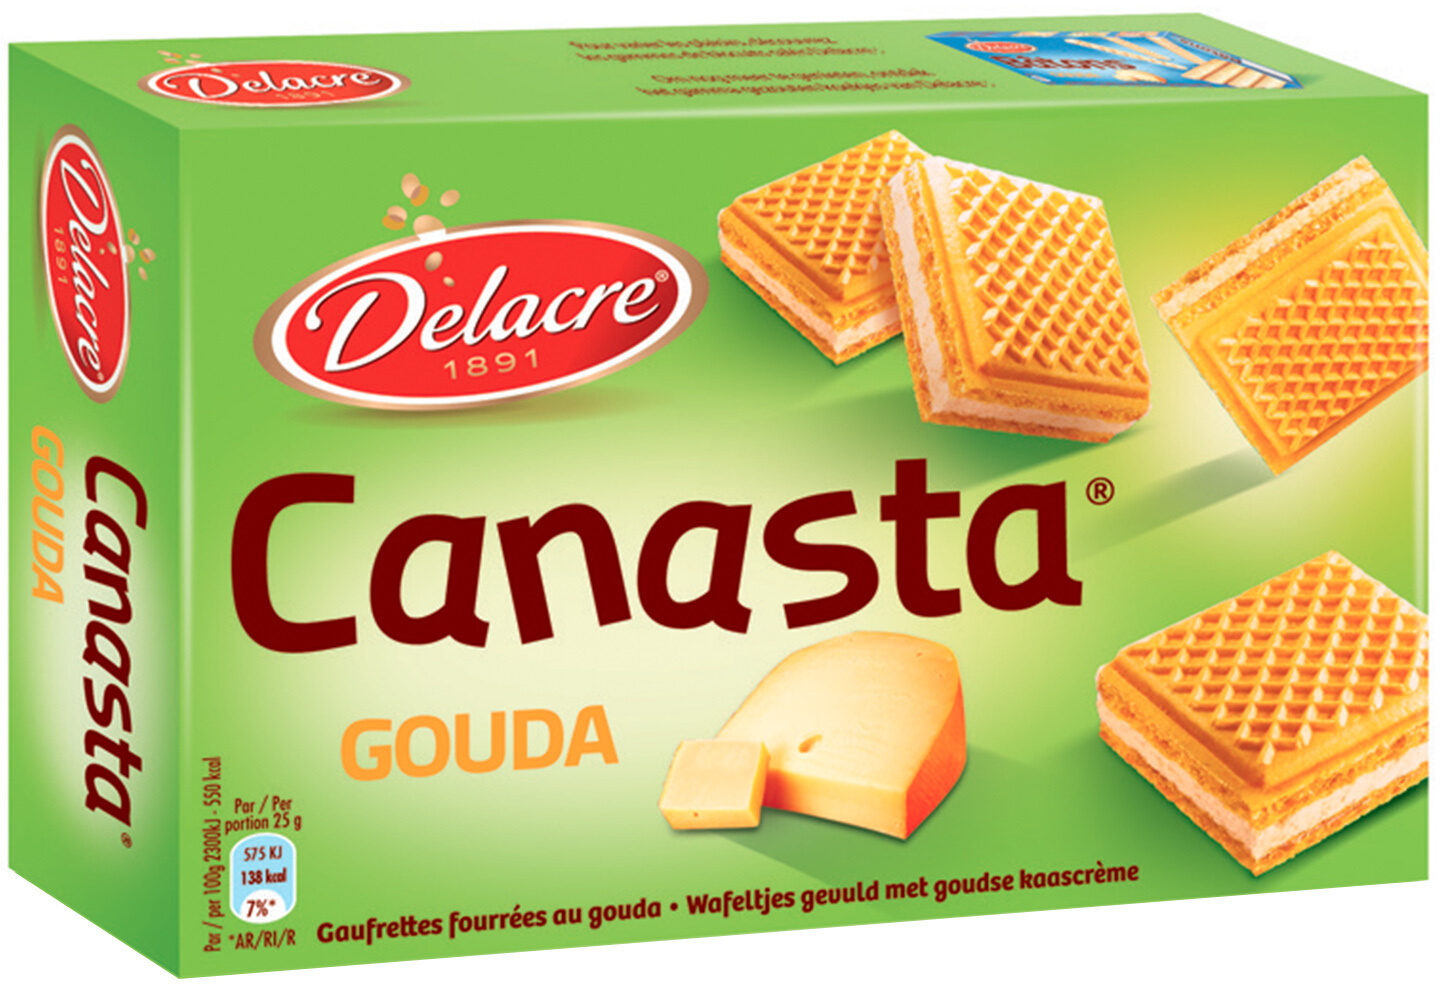 Delacre canasta gouda - Produit - fr